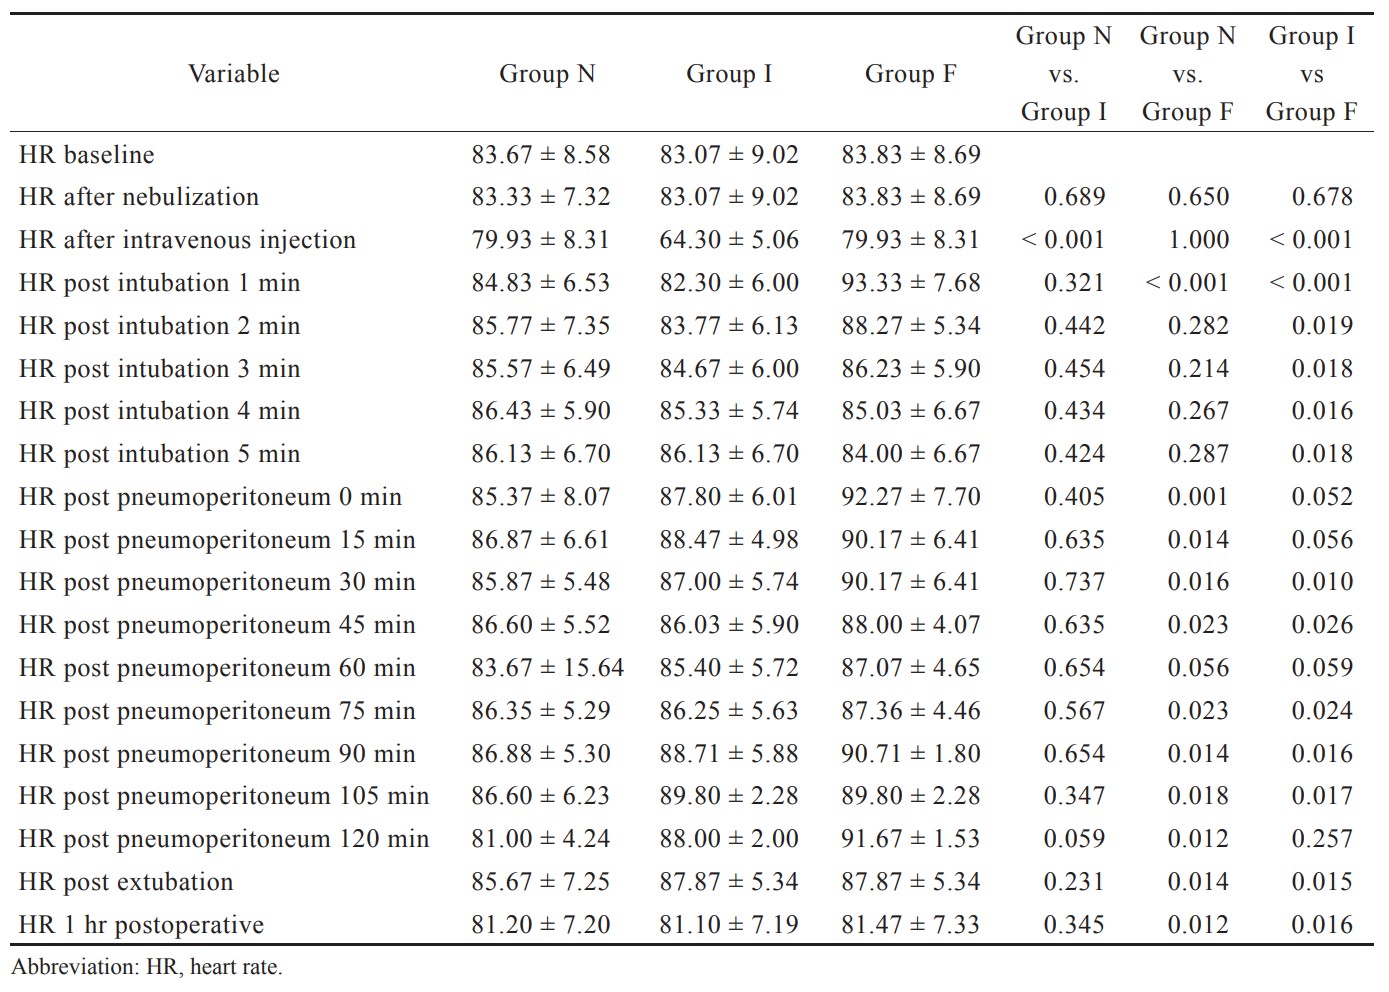 A comparison of Esmolol and Labetalol for Attenuation of Sympathomimetic  Responses to Laryngoscopy and Intubation